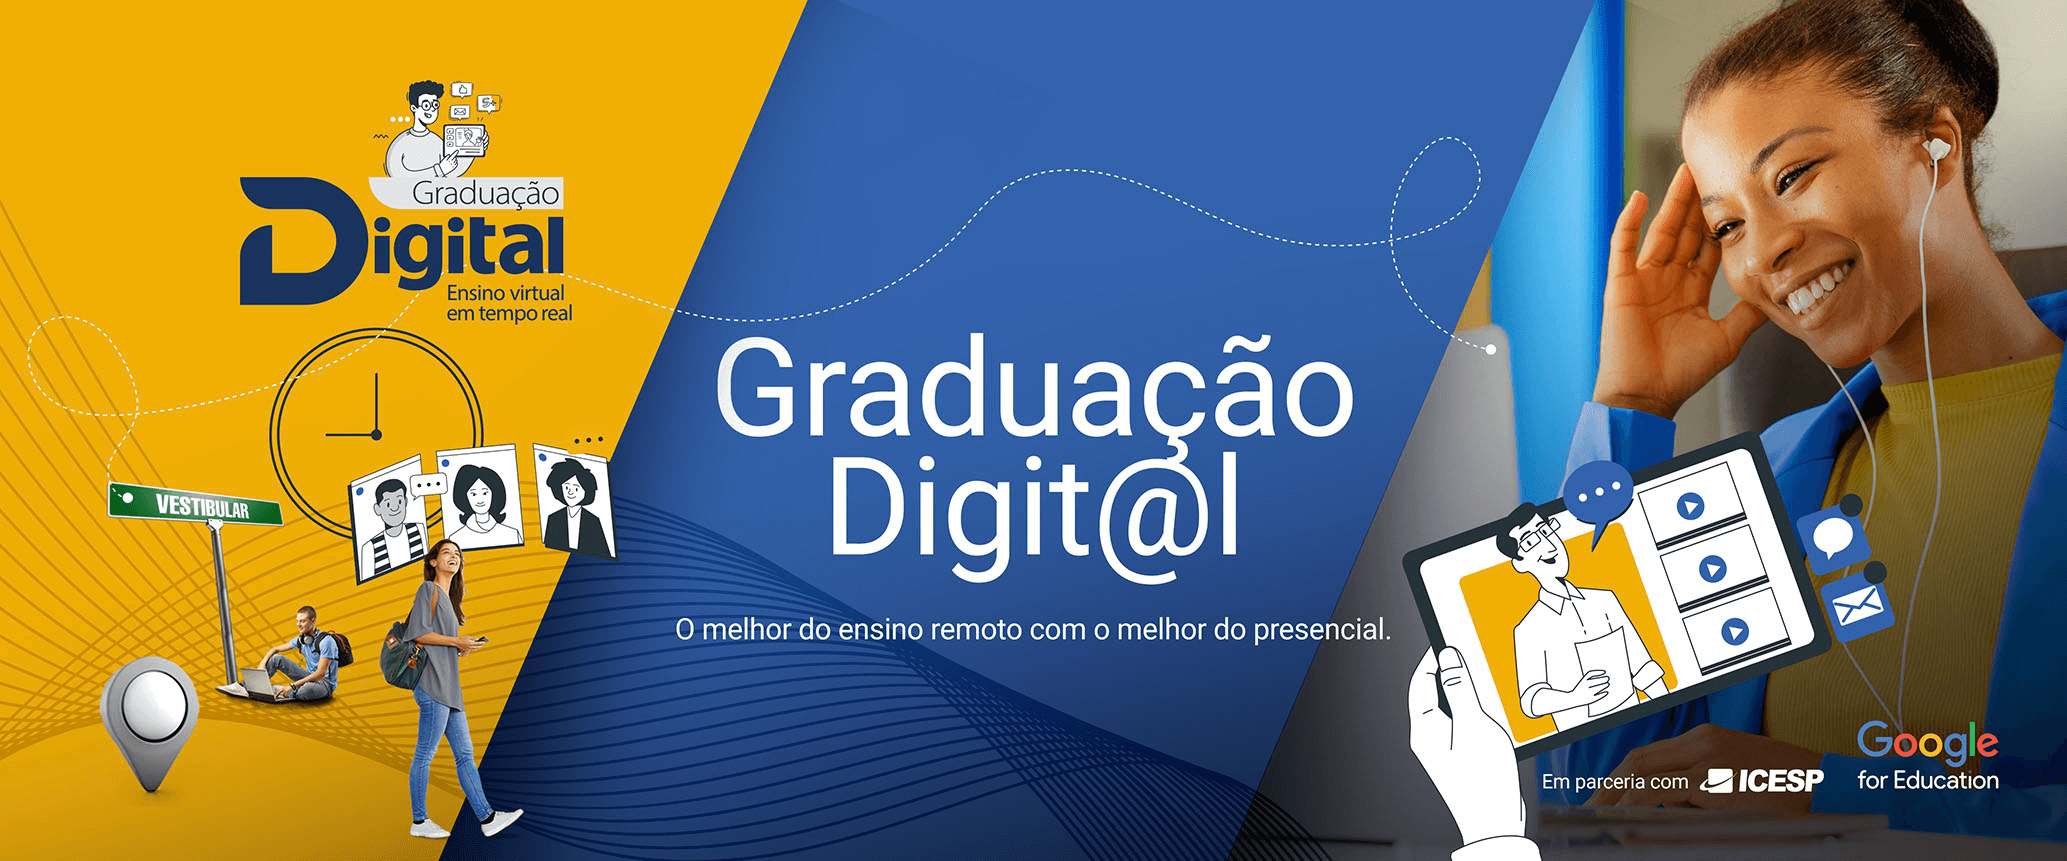 graduacao_digital_slide_home_NEUTRO